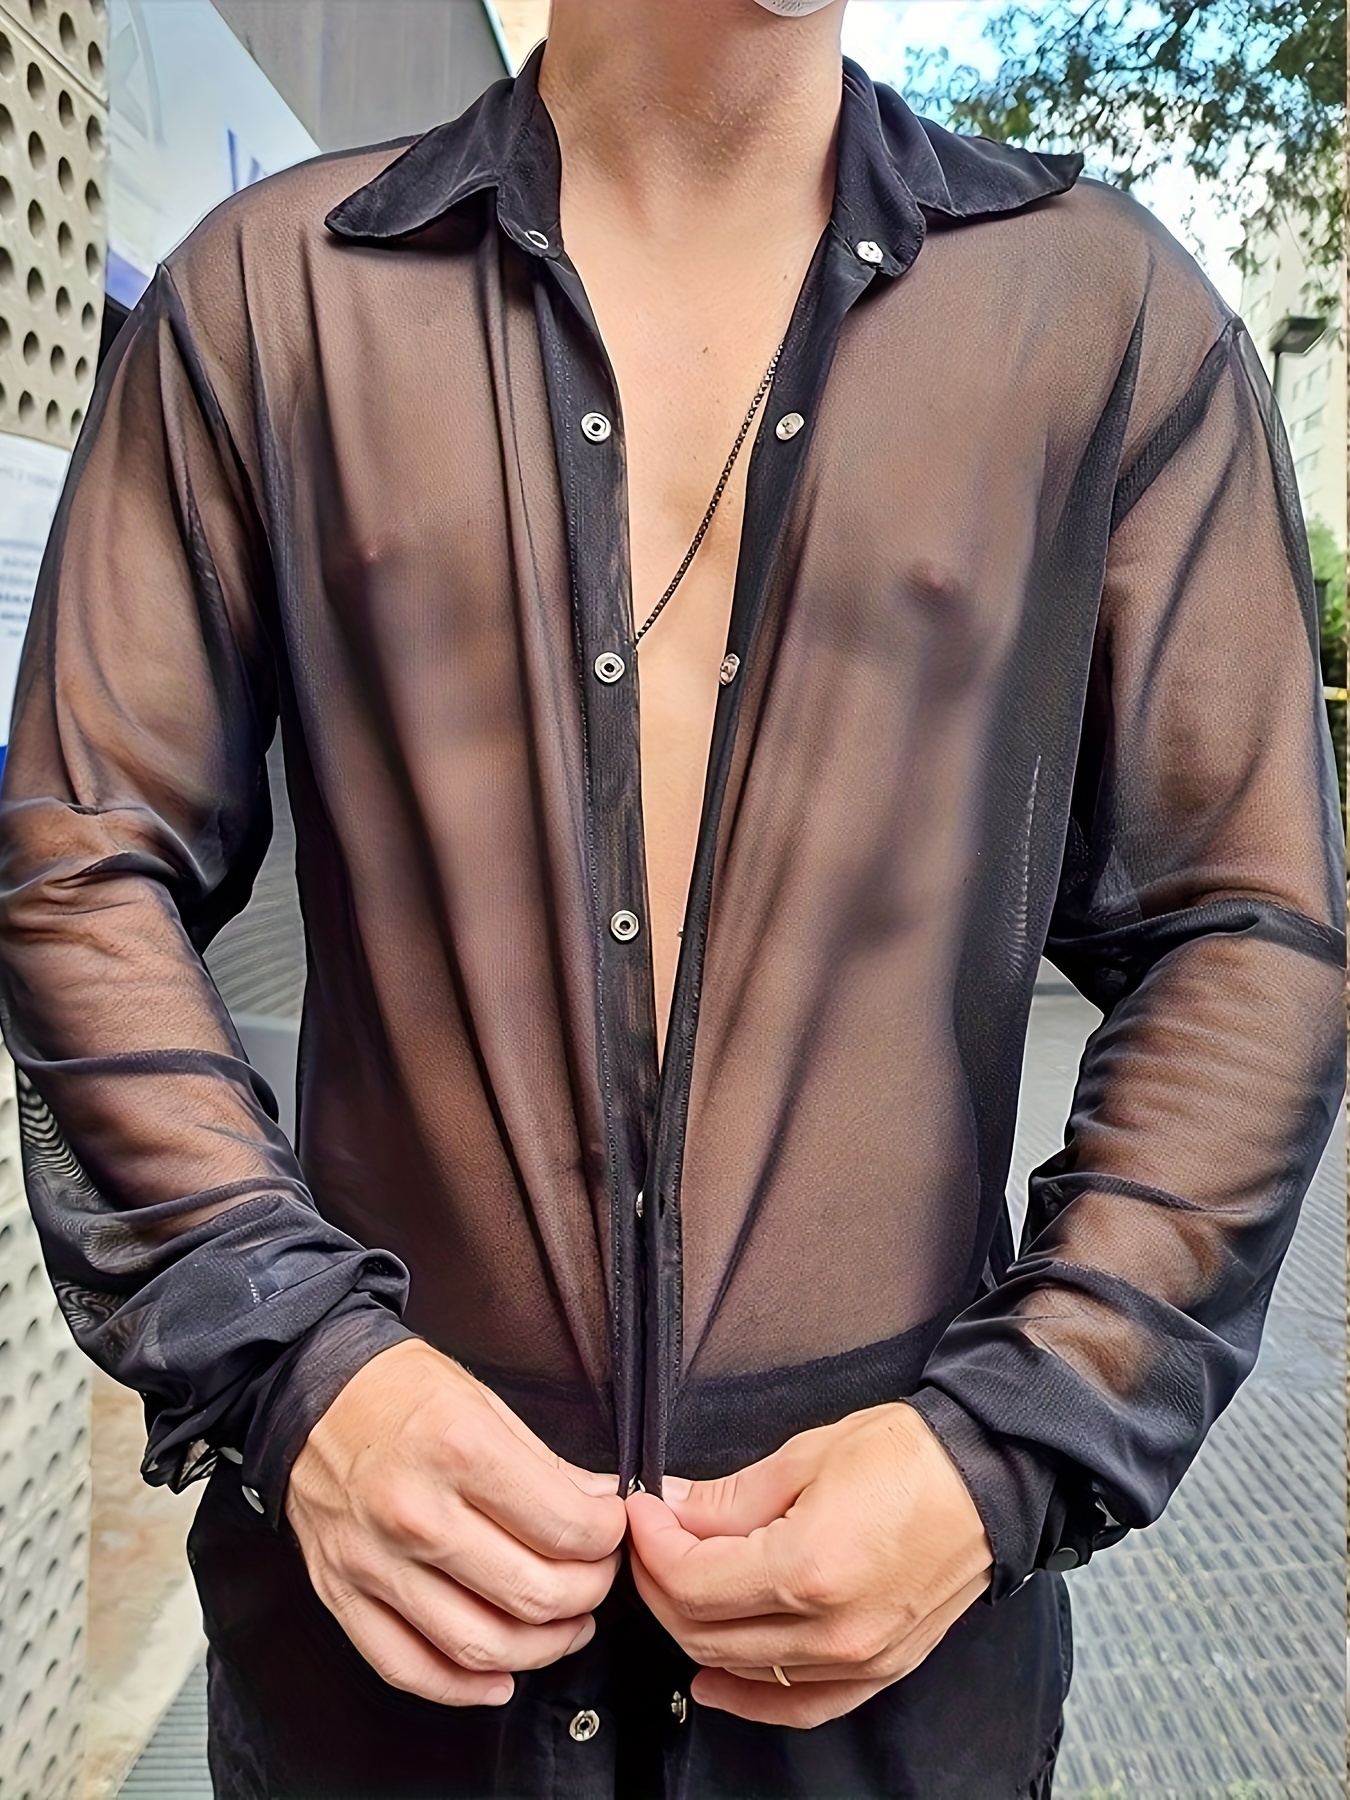 Fashion Men's Sexy See Through Shirts Mesh Sheer Transparent T